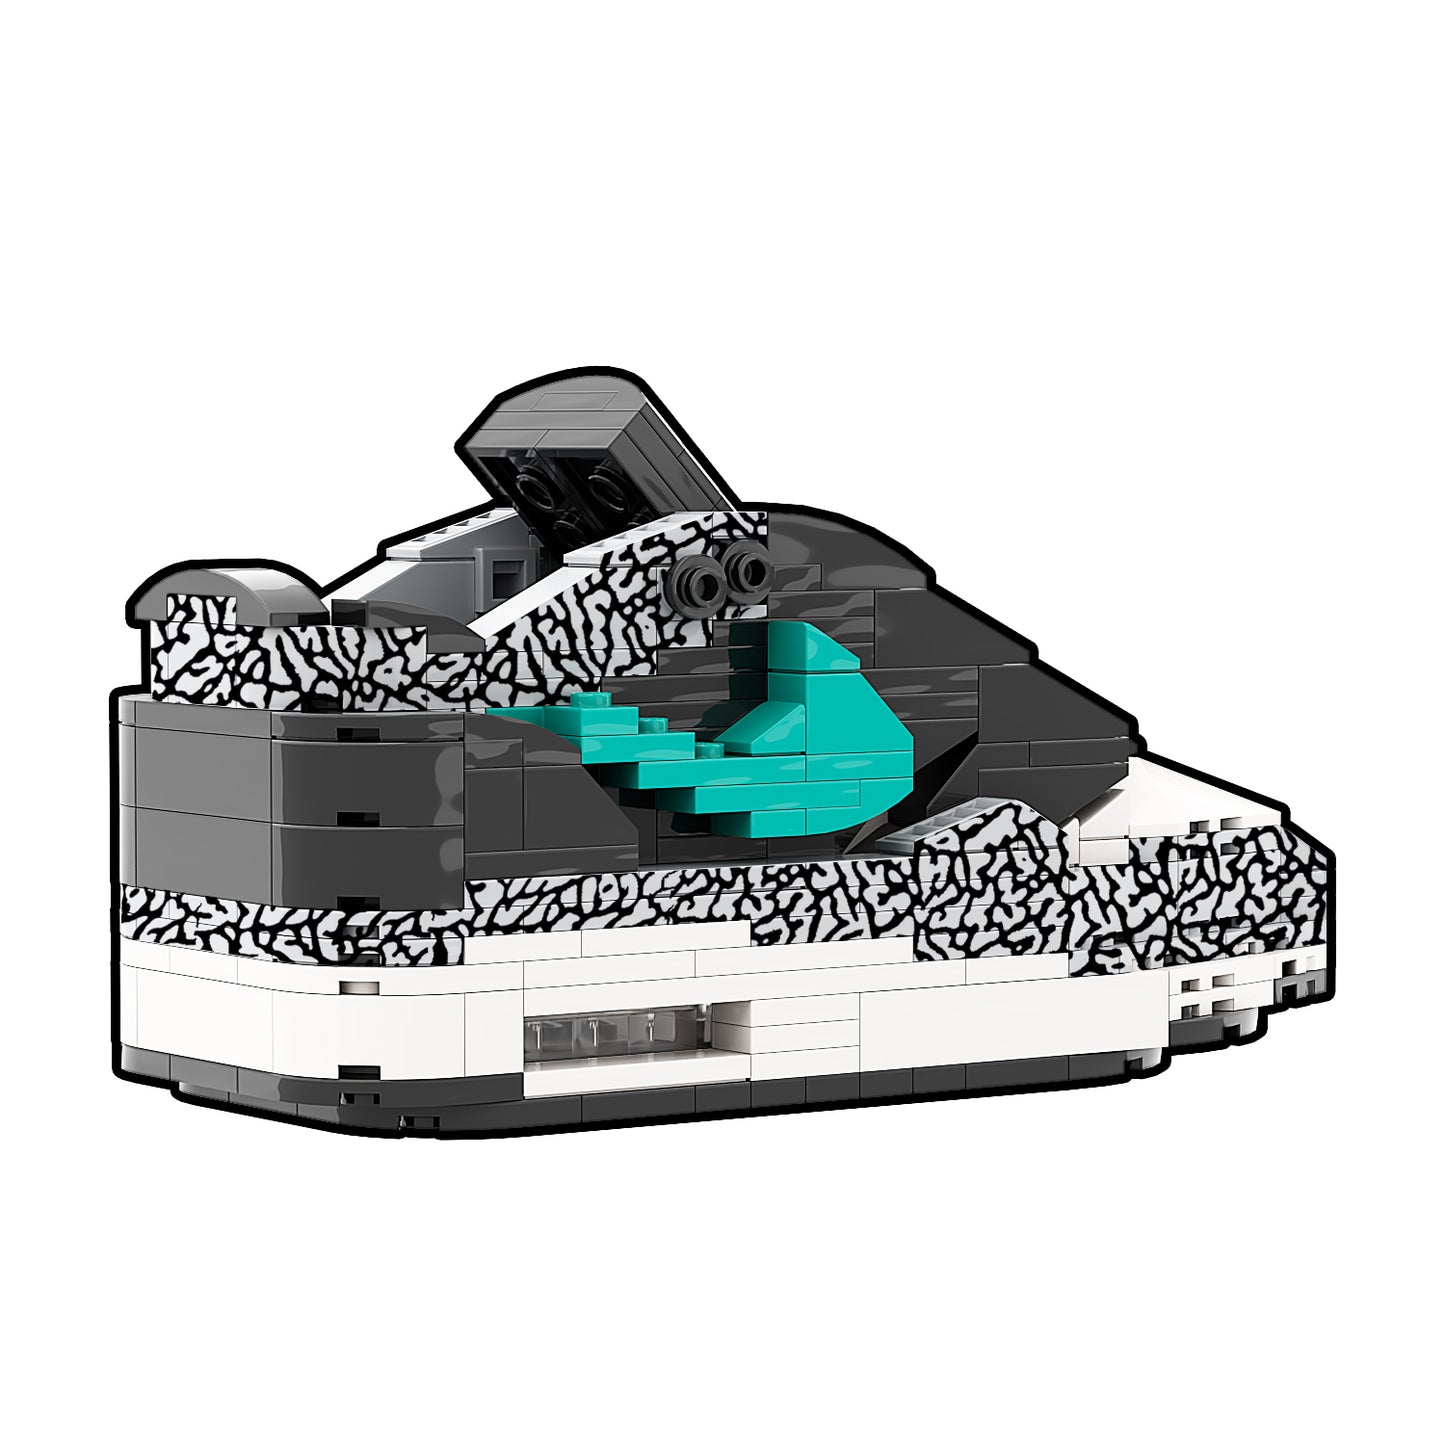 REGULAR Air Max 1 "Atmos" Sneaker Bricks with Mini Figure